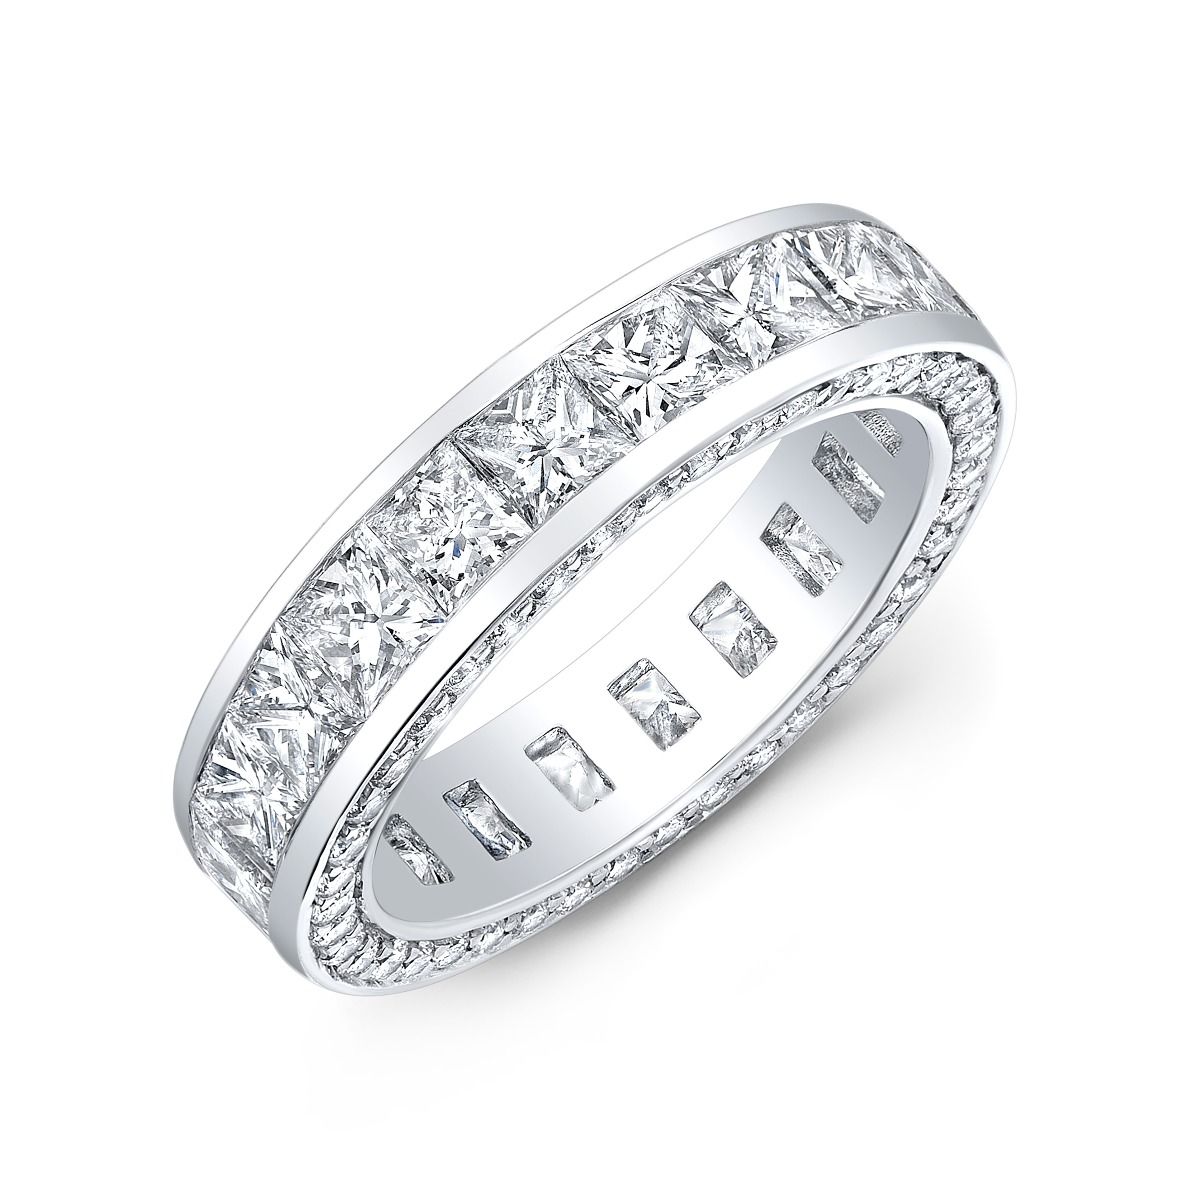 5.5 Carat Princess Cut Diamond Eternity Wedding Band ring